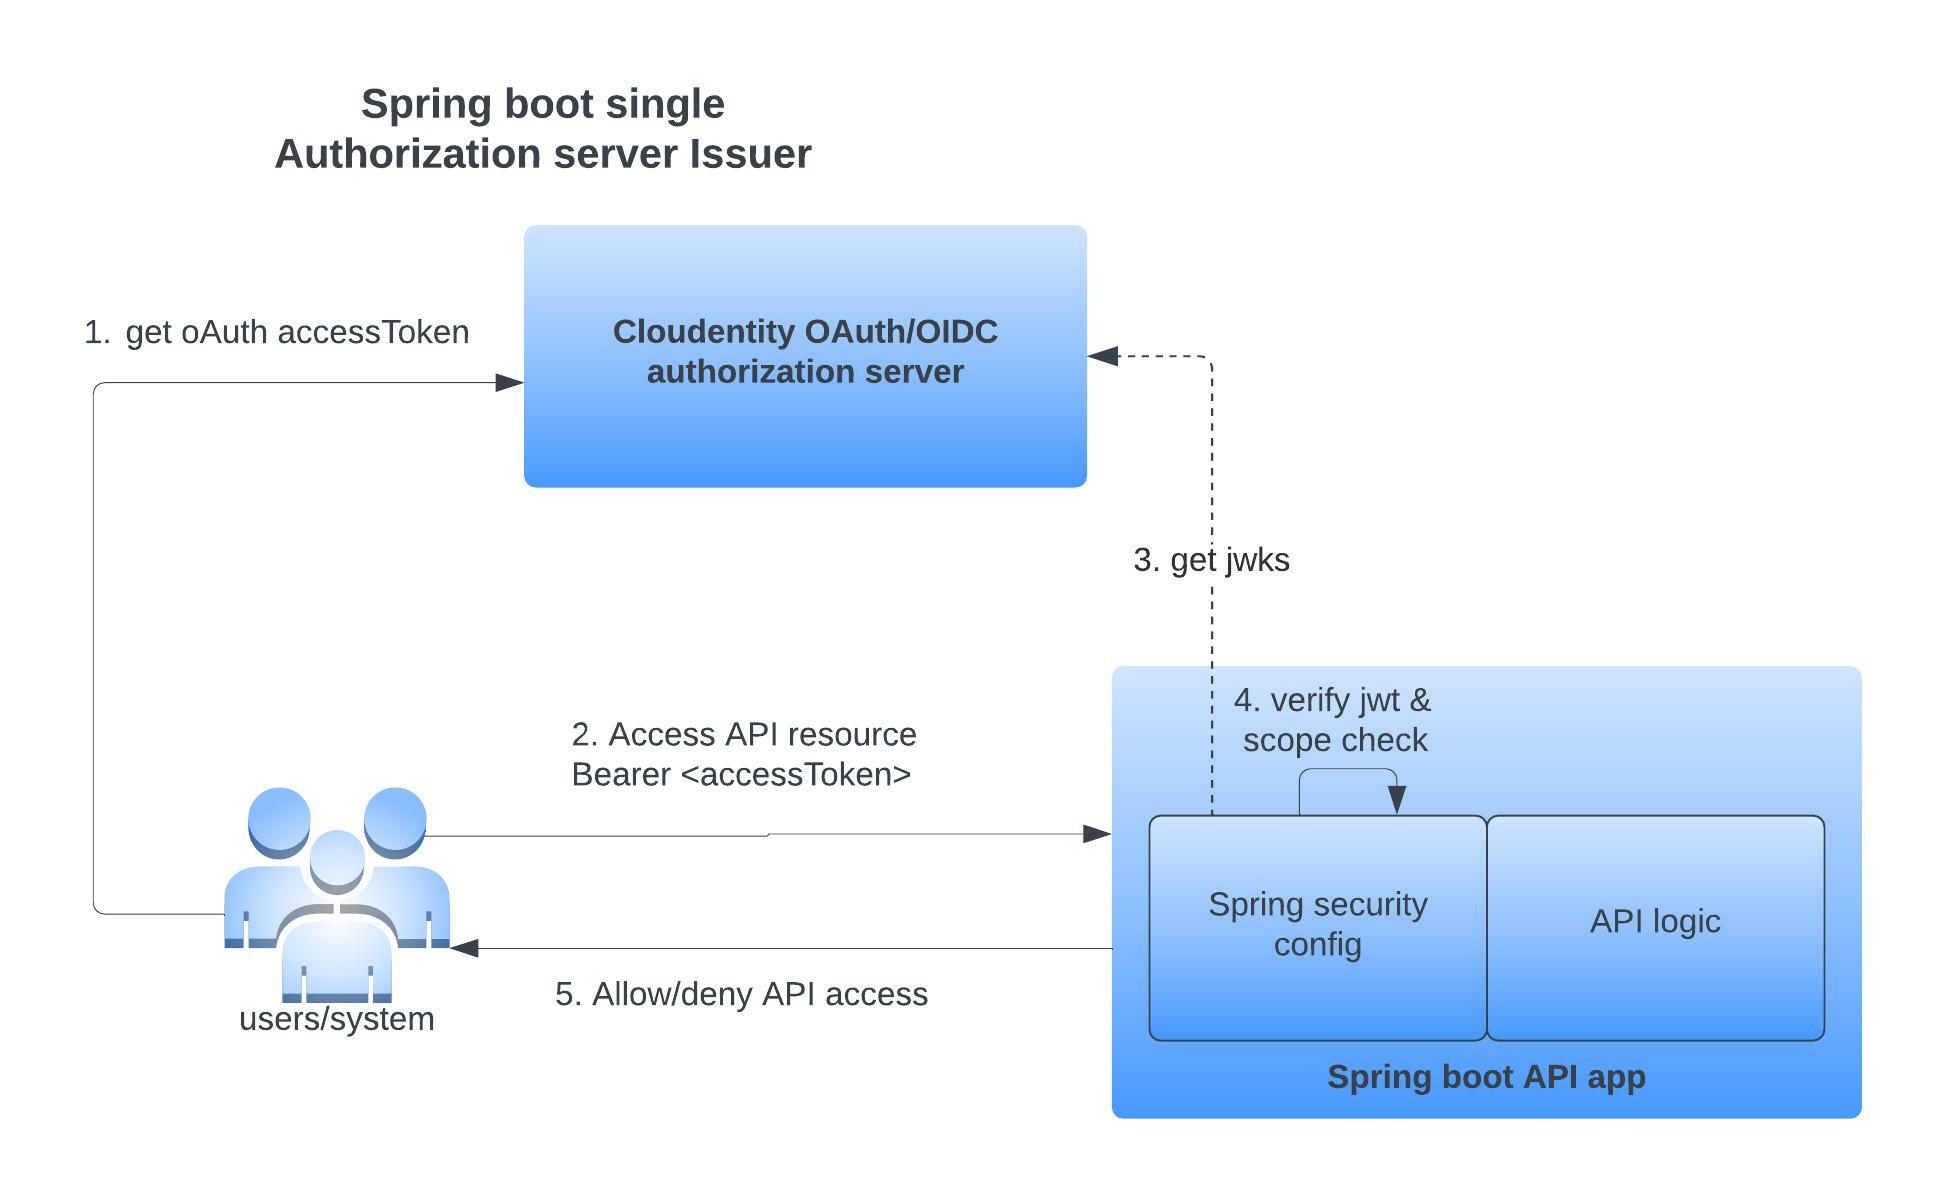 SpringBoot API single OAuth server trust